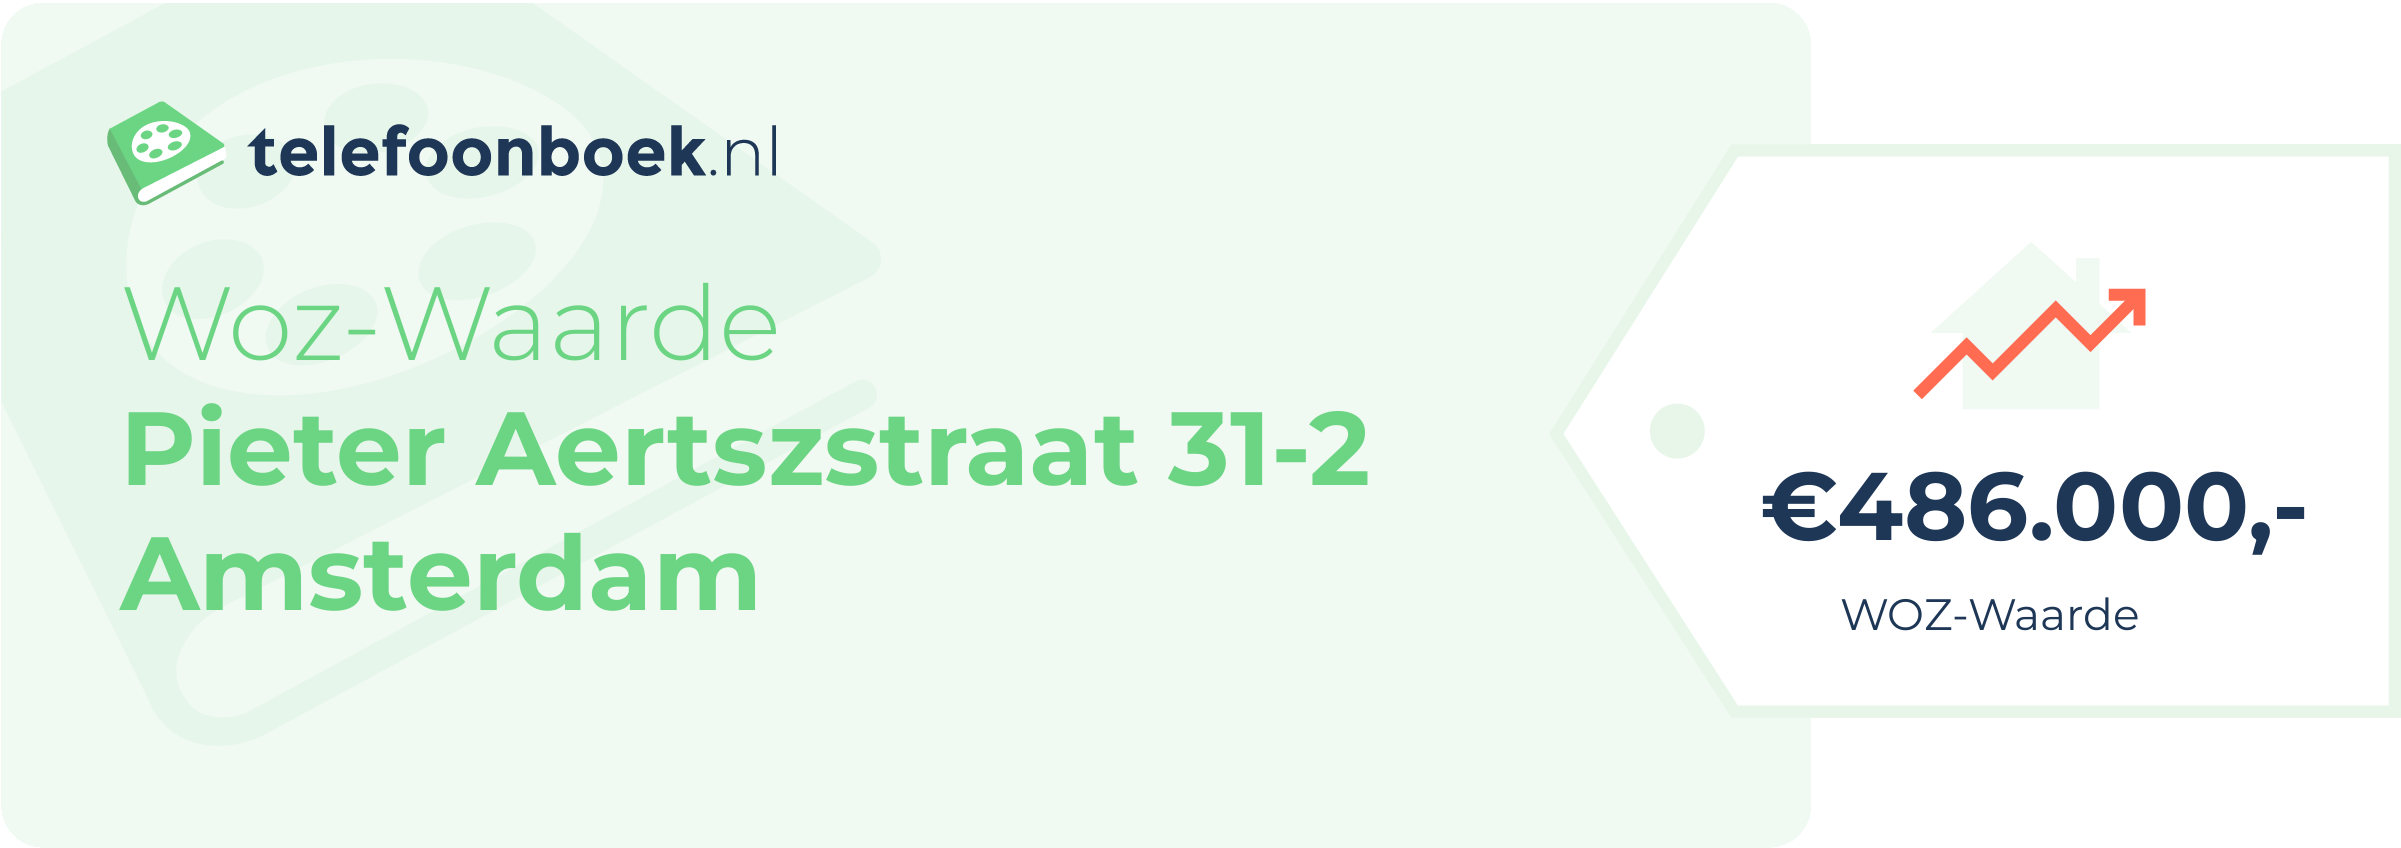 WOZ-waarde Pieter Aertszstraat 31-2 Amsterdam